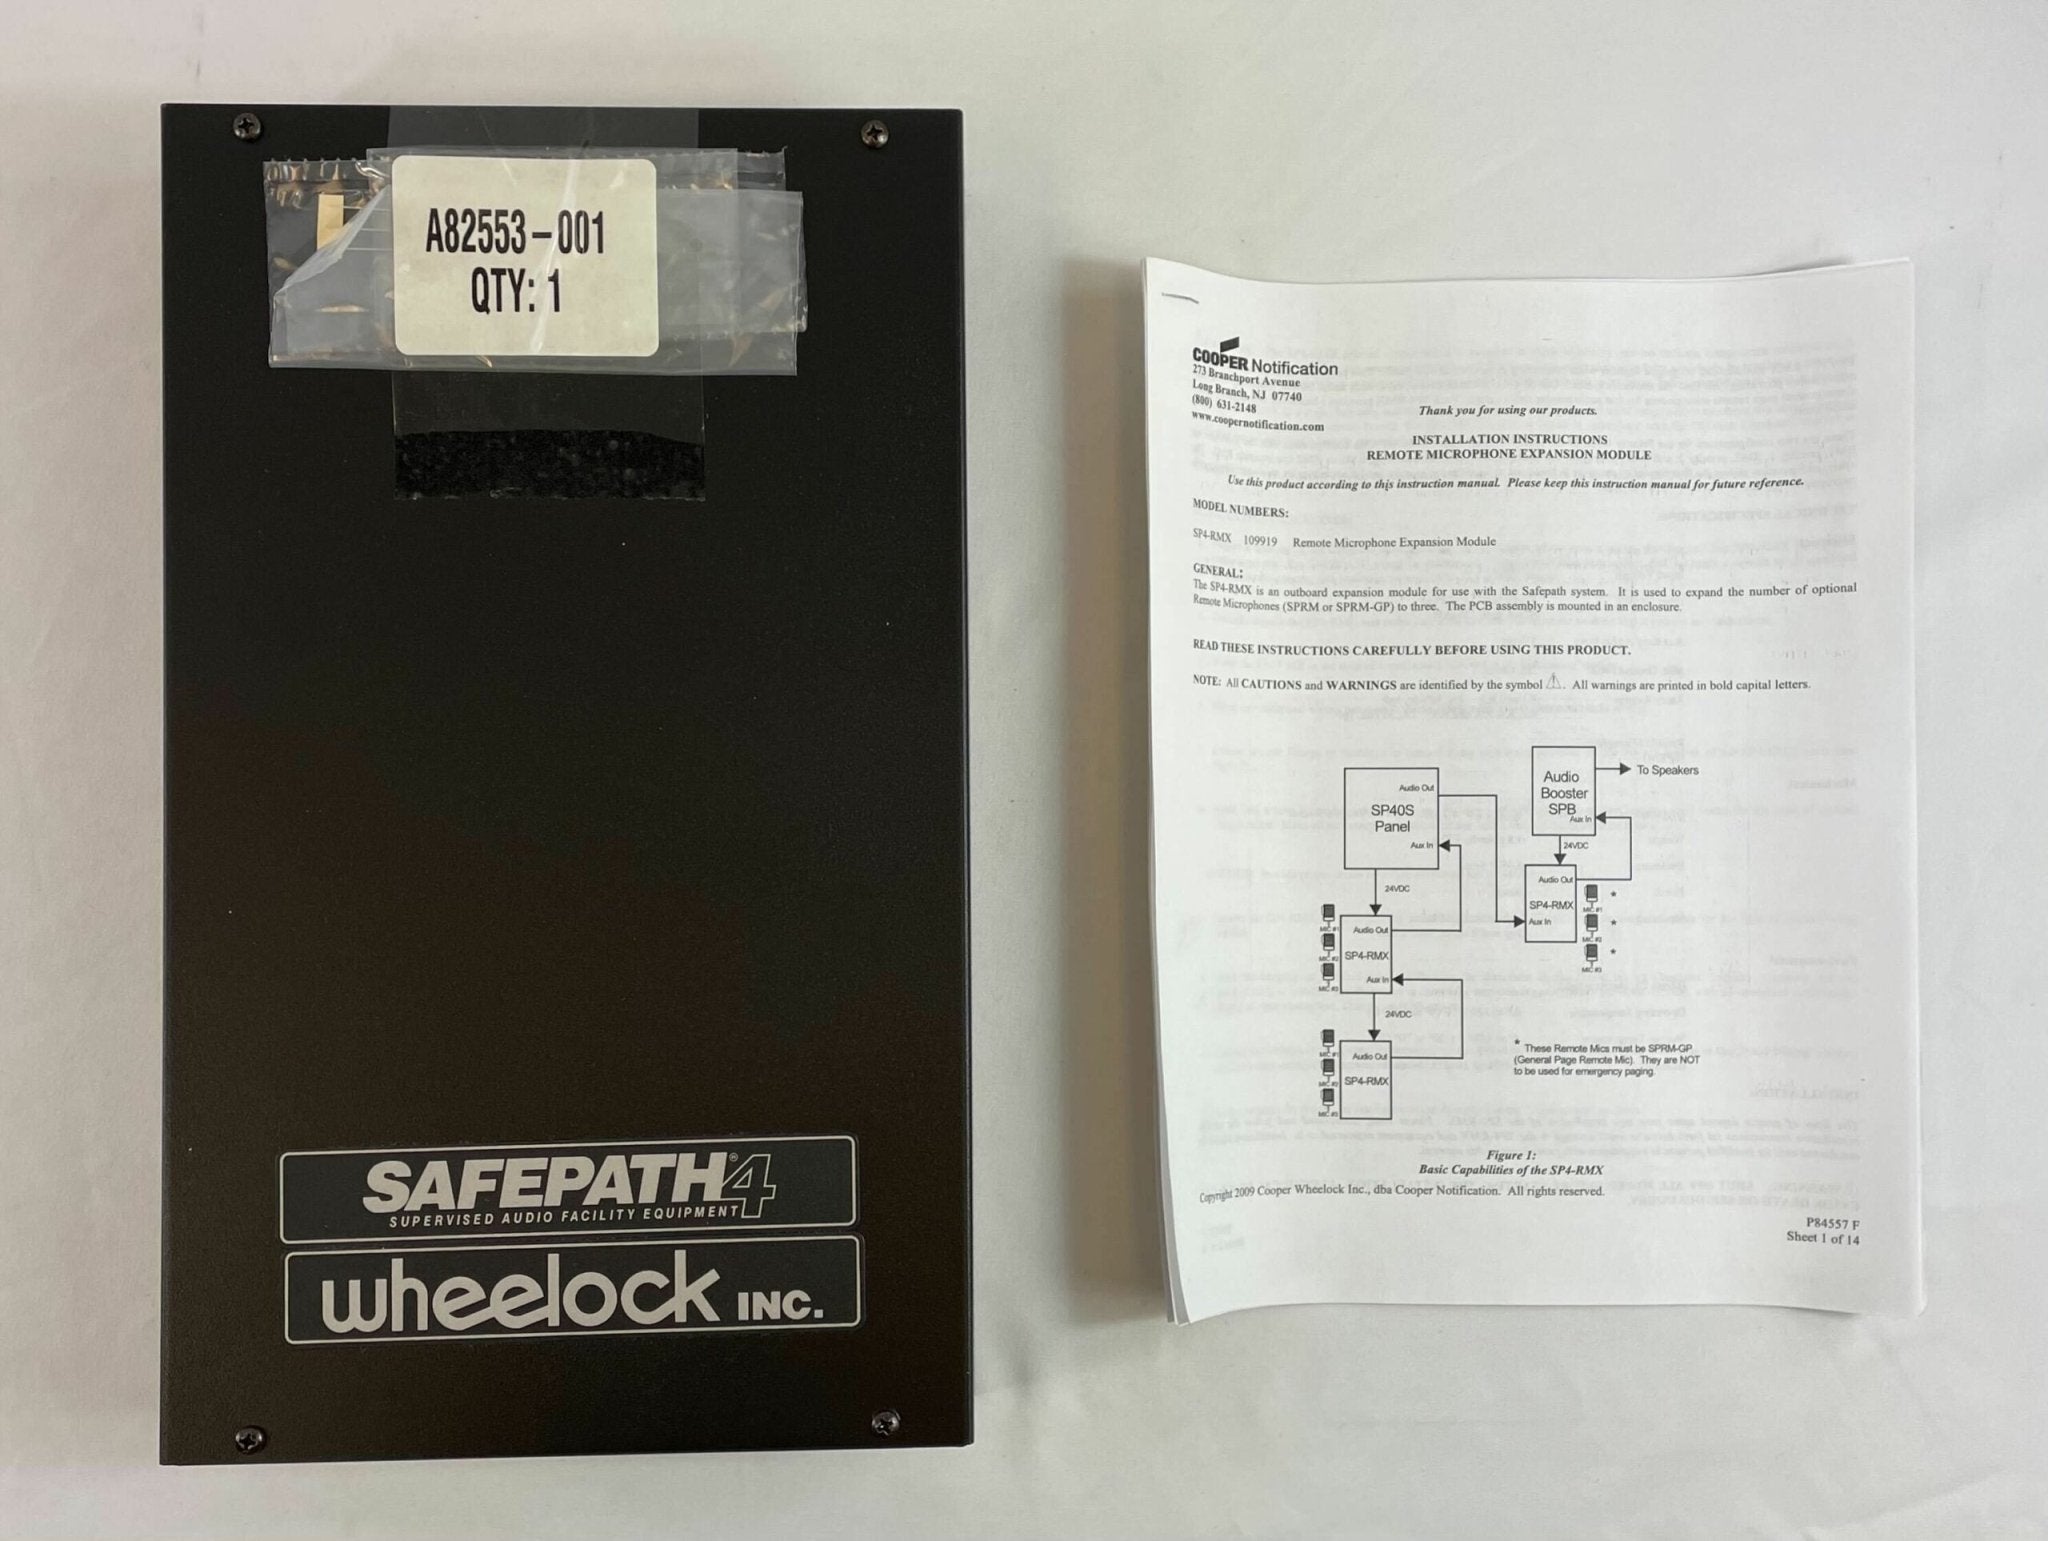 Wheelock SP4-RMX - The Fire Alarm Supplier